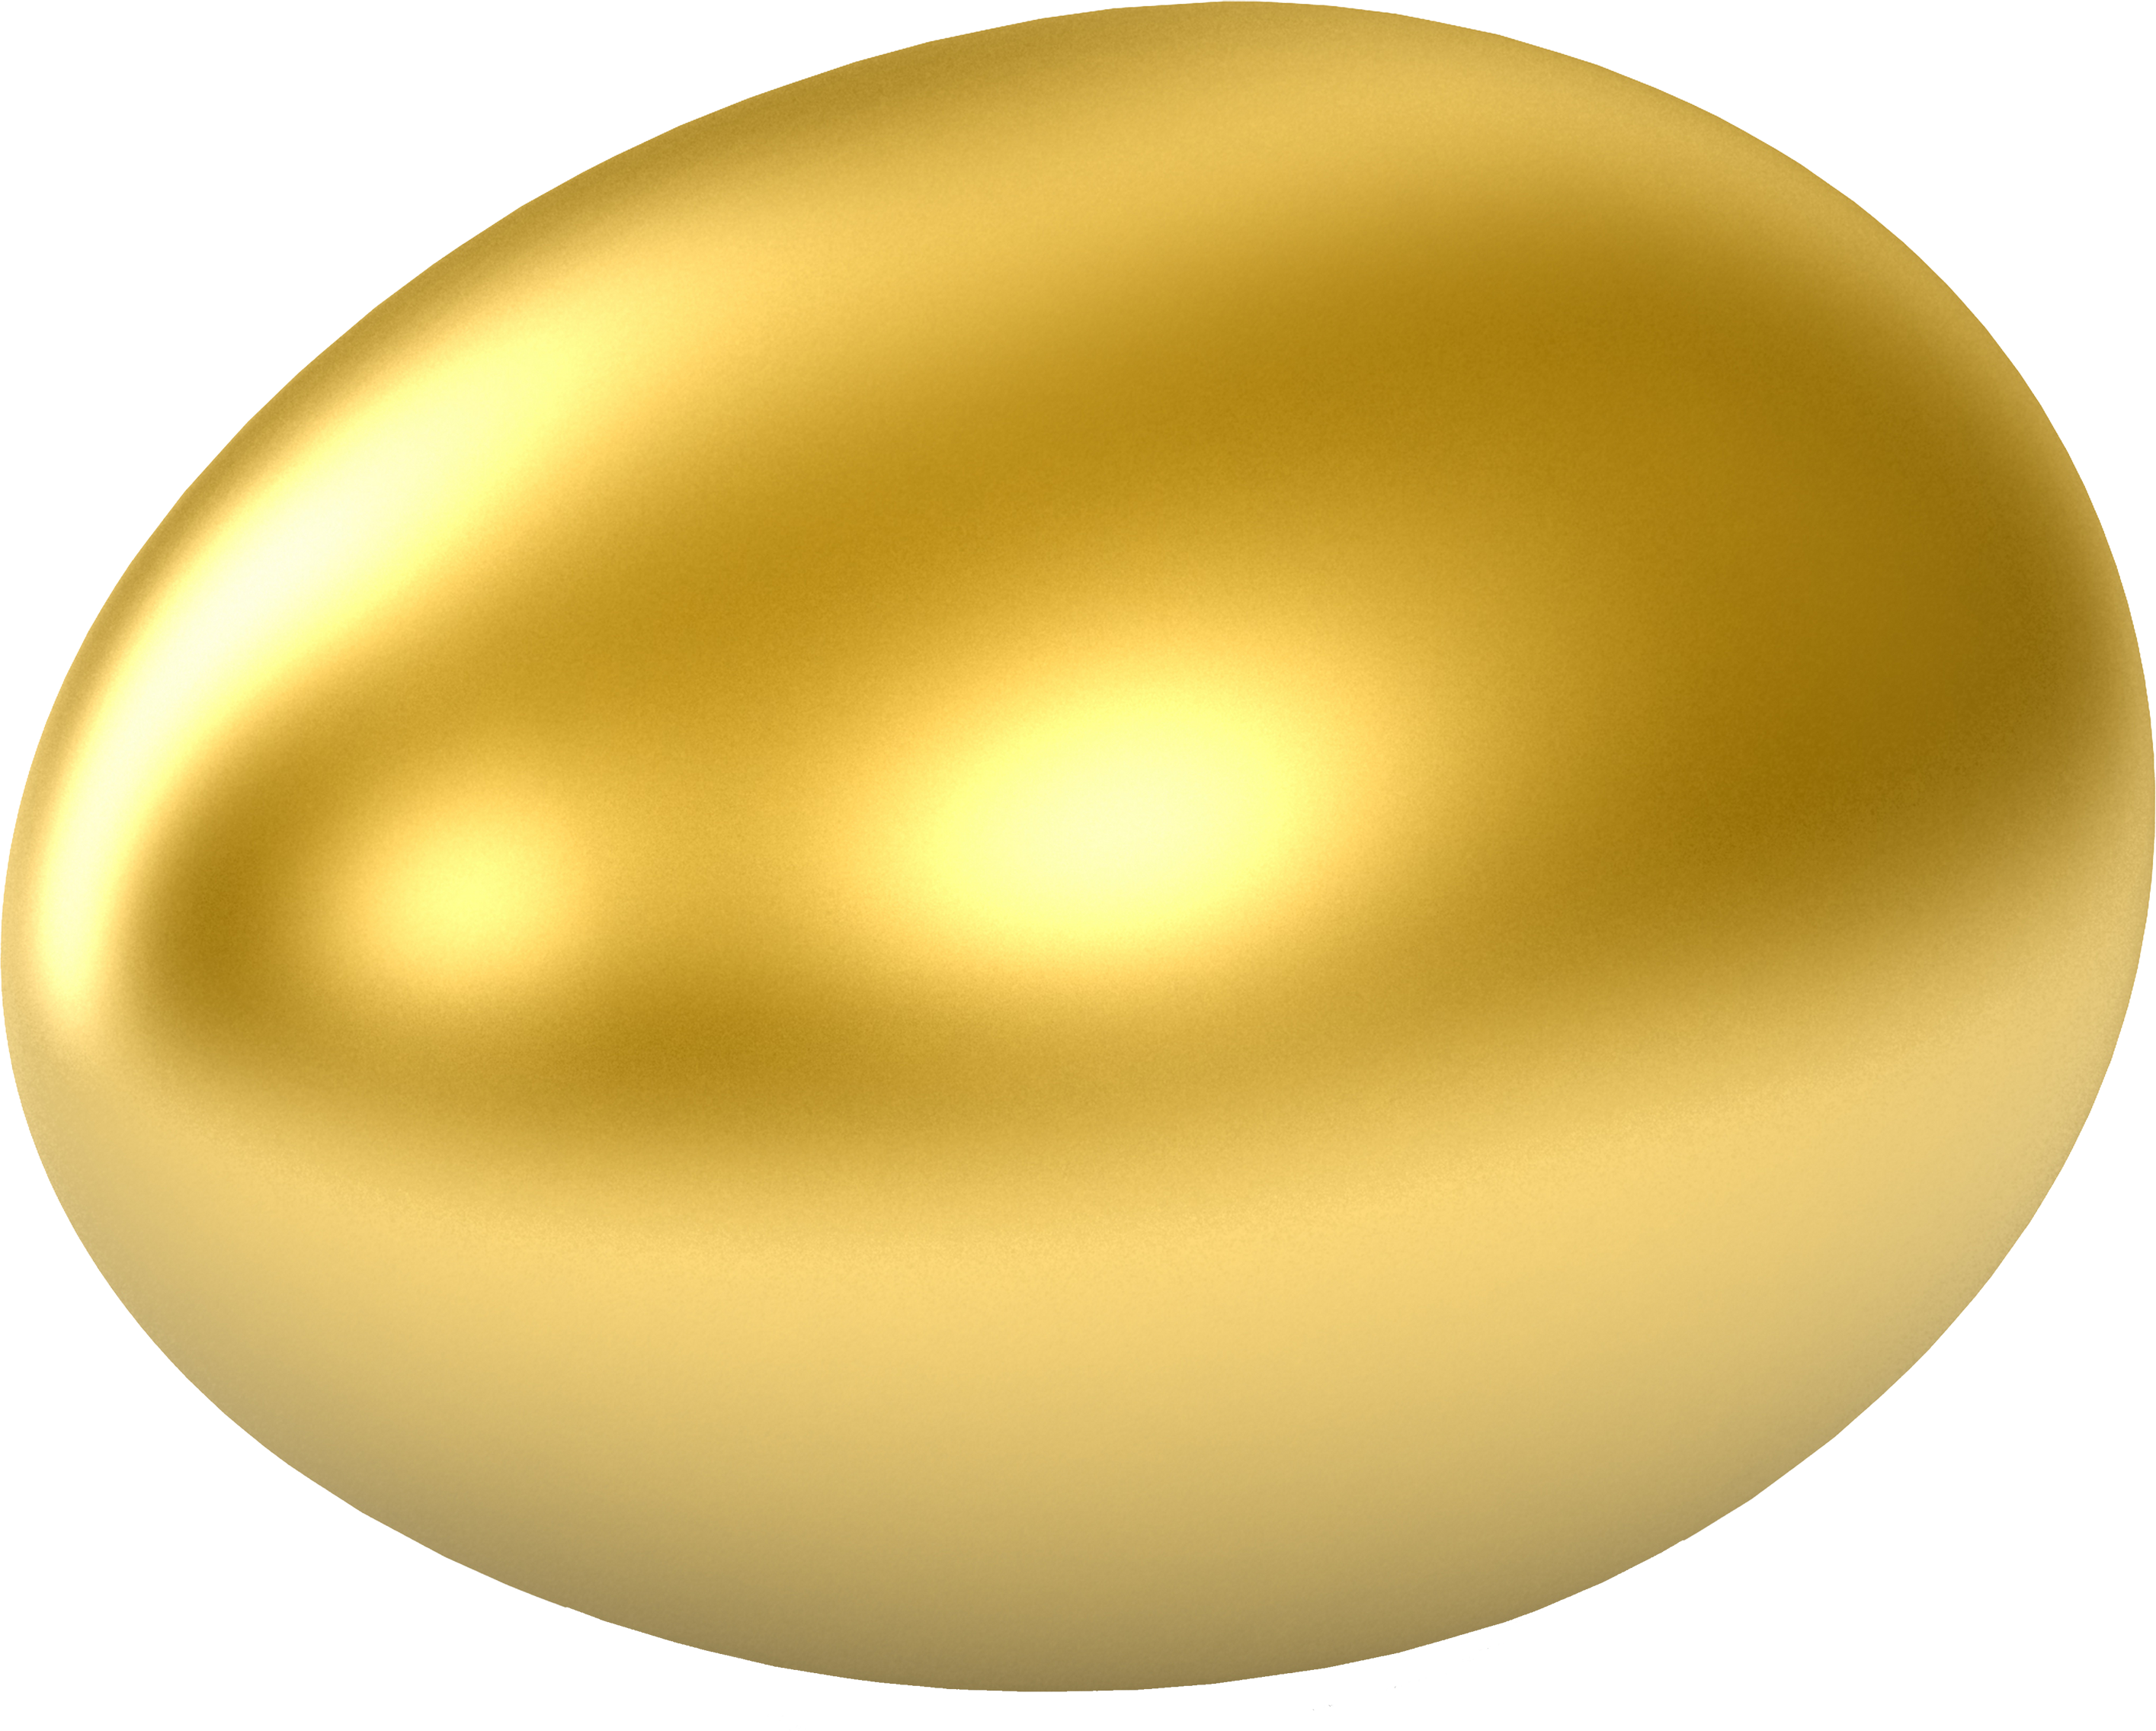 Easter eggs splashes gold paint on transparent background PNG - Similar PNG